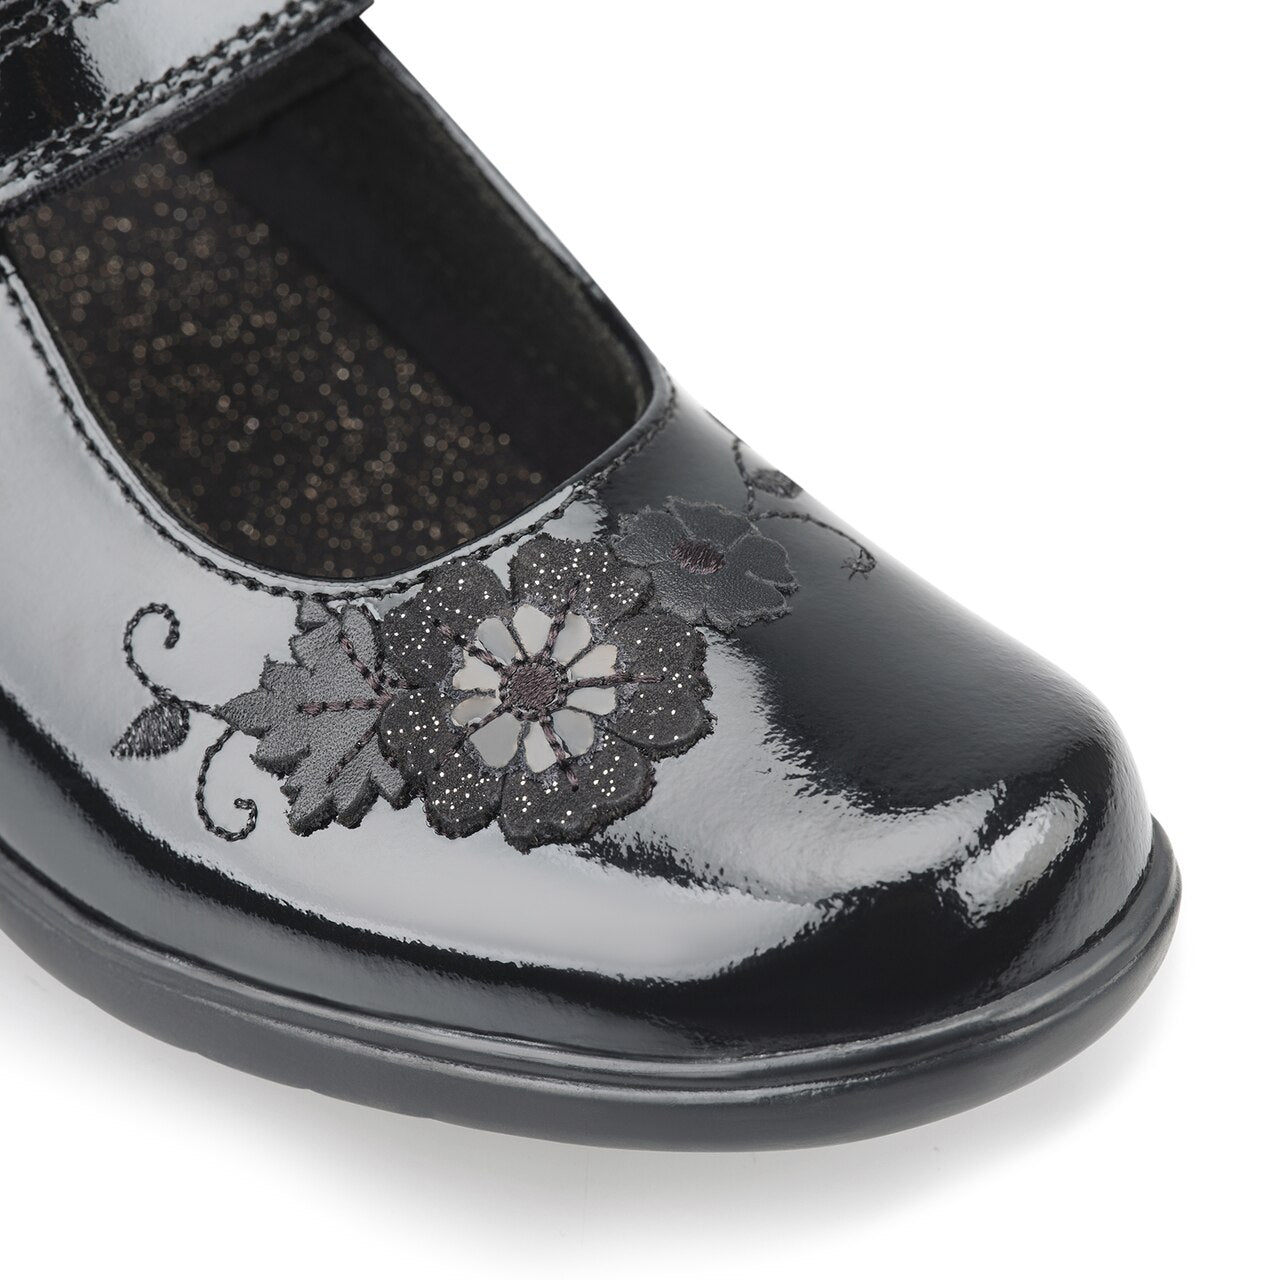 Wish Girl's Black Patent Leather School Shoe